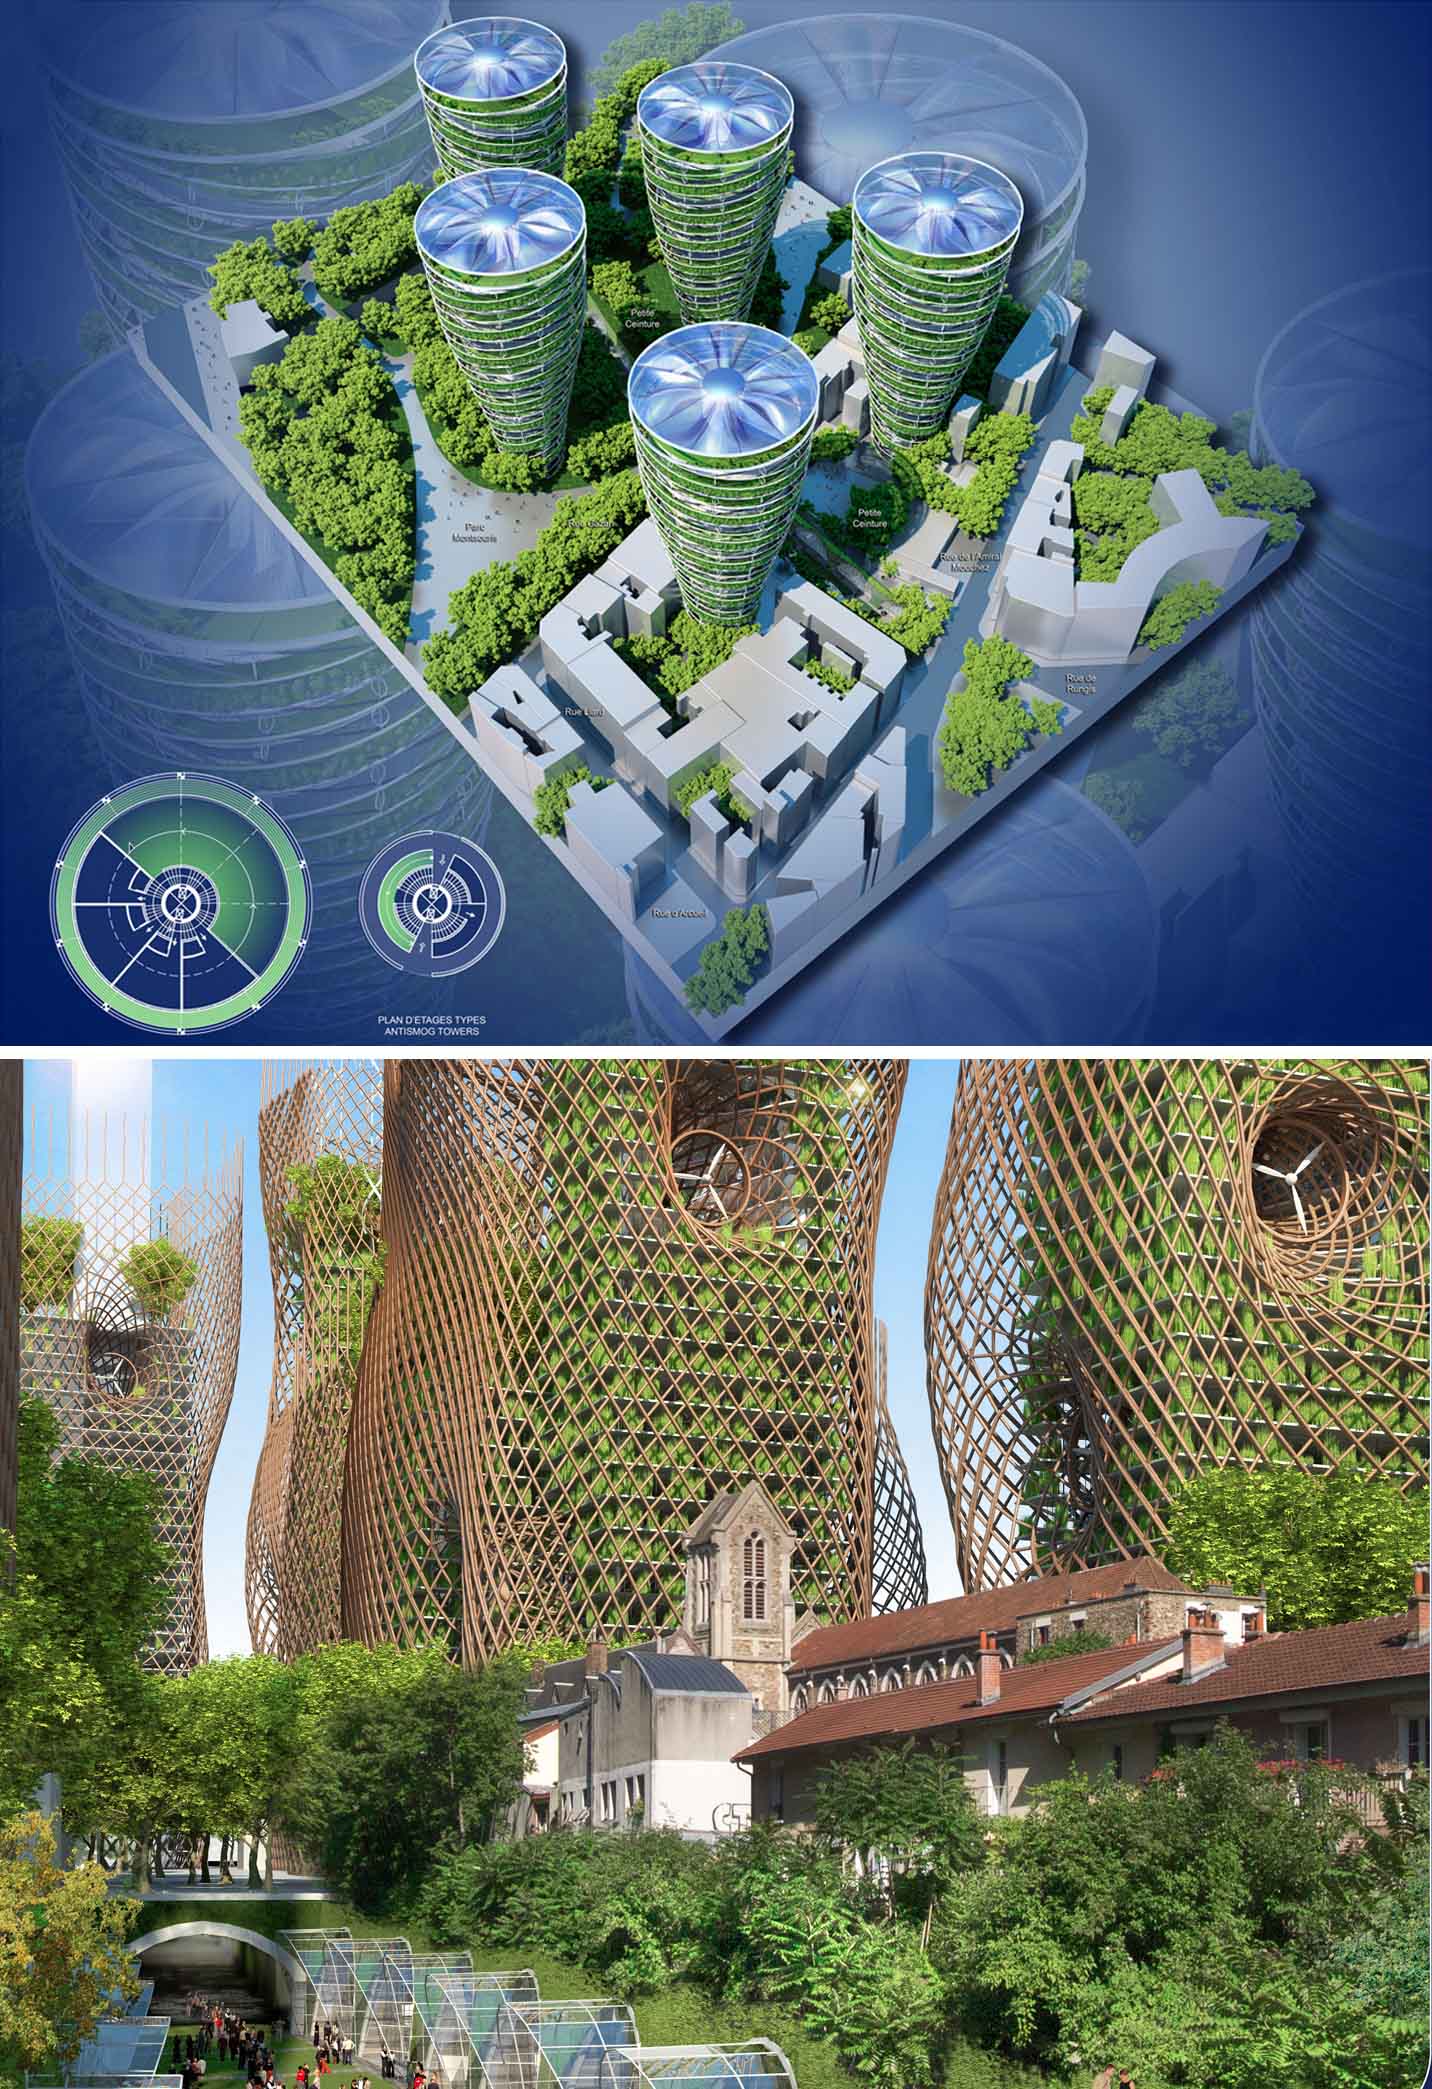 cities-future-paris-2050-antismog-tower-bamboo-nest